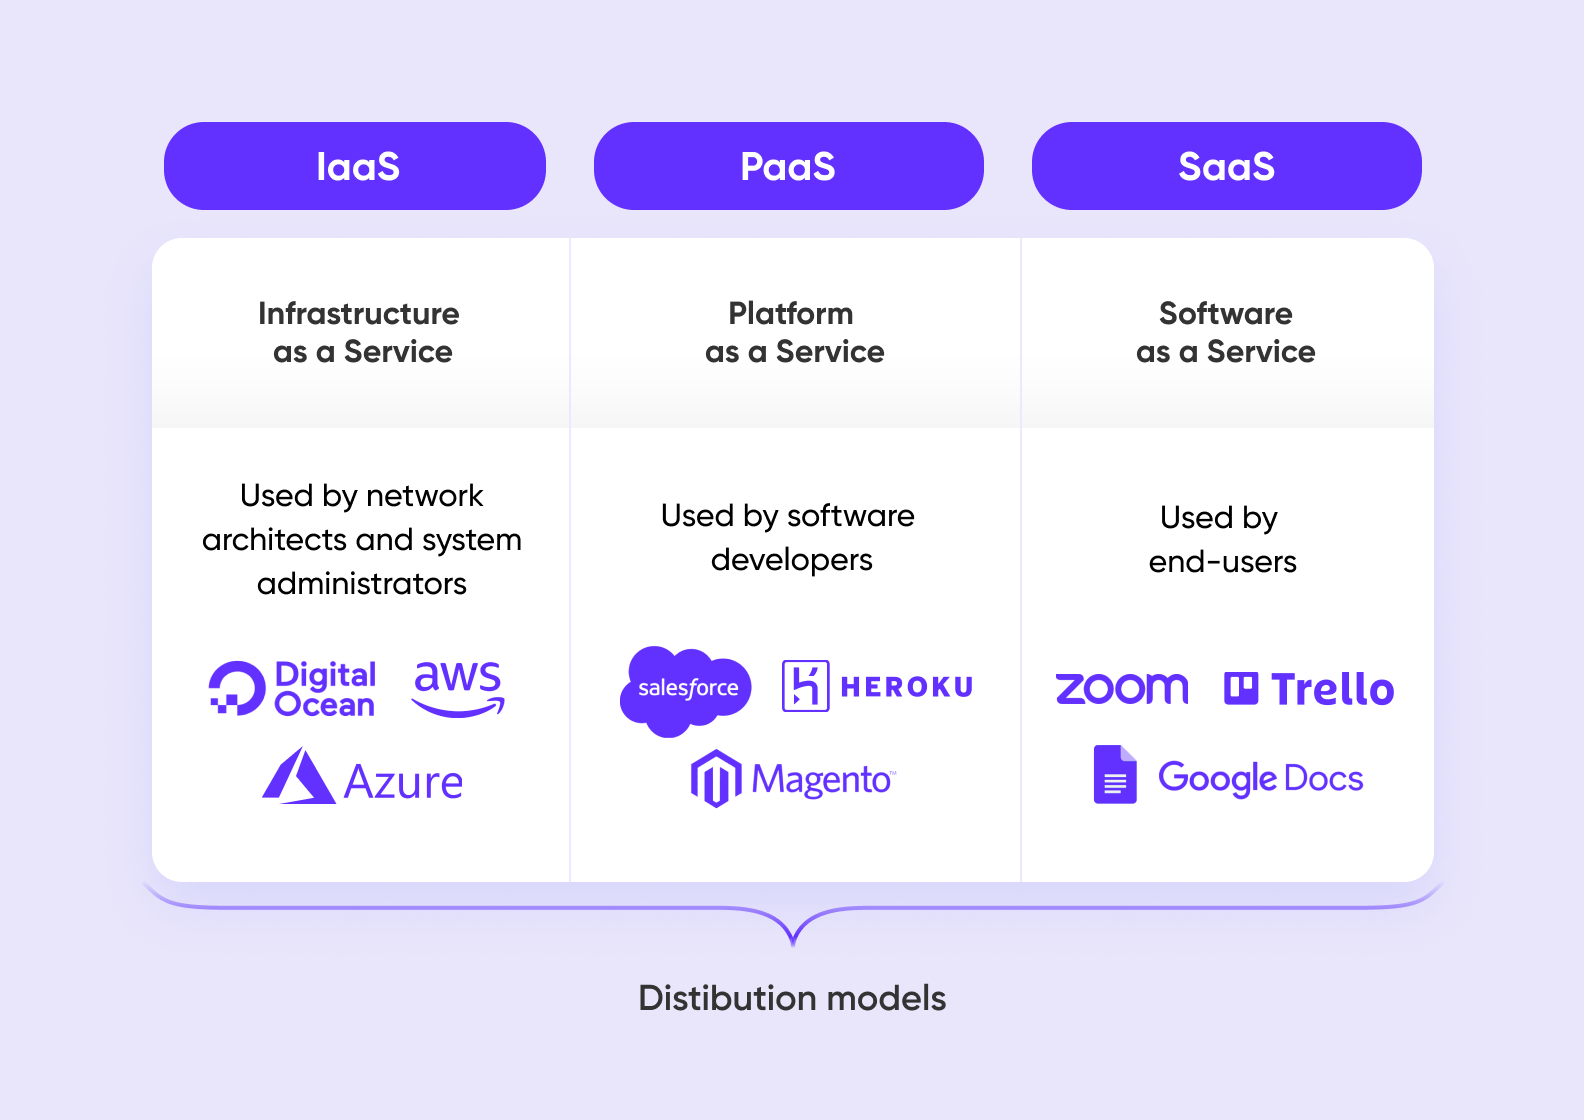 Three types of cloud services: IaaS, PaaS, and SaaS